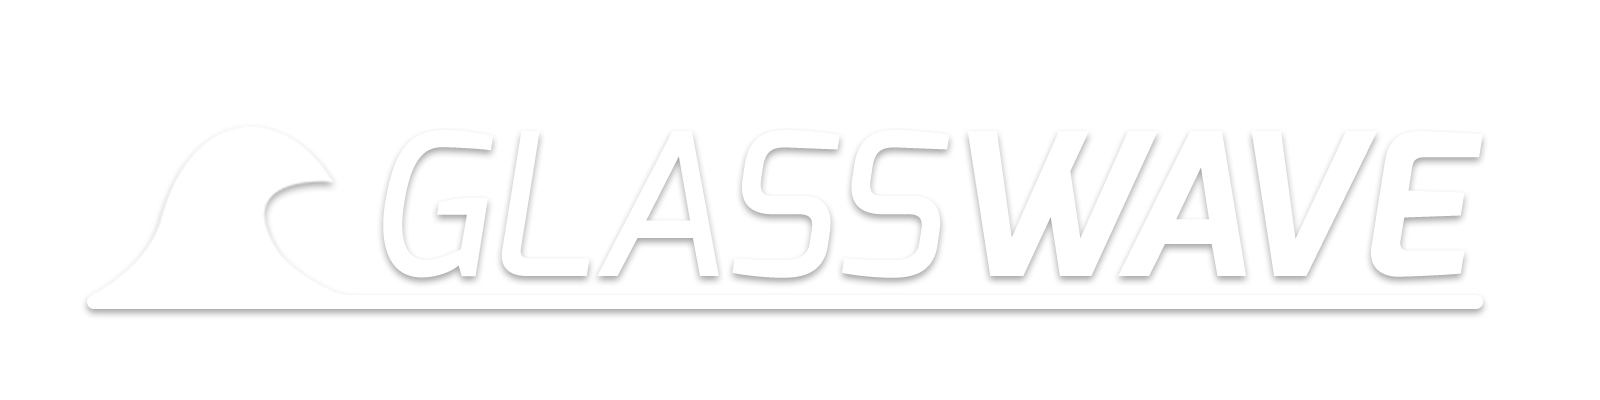 glasswave logo